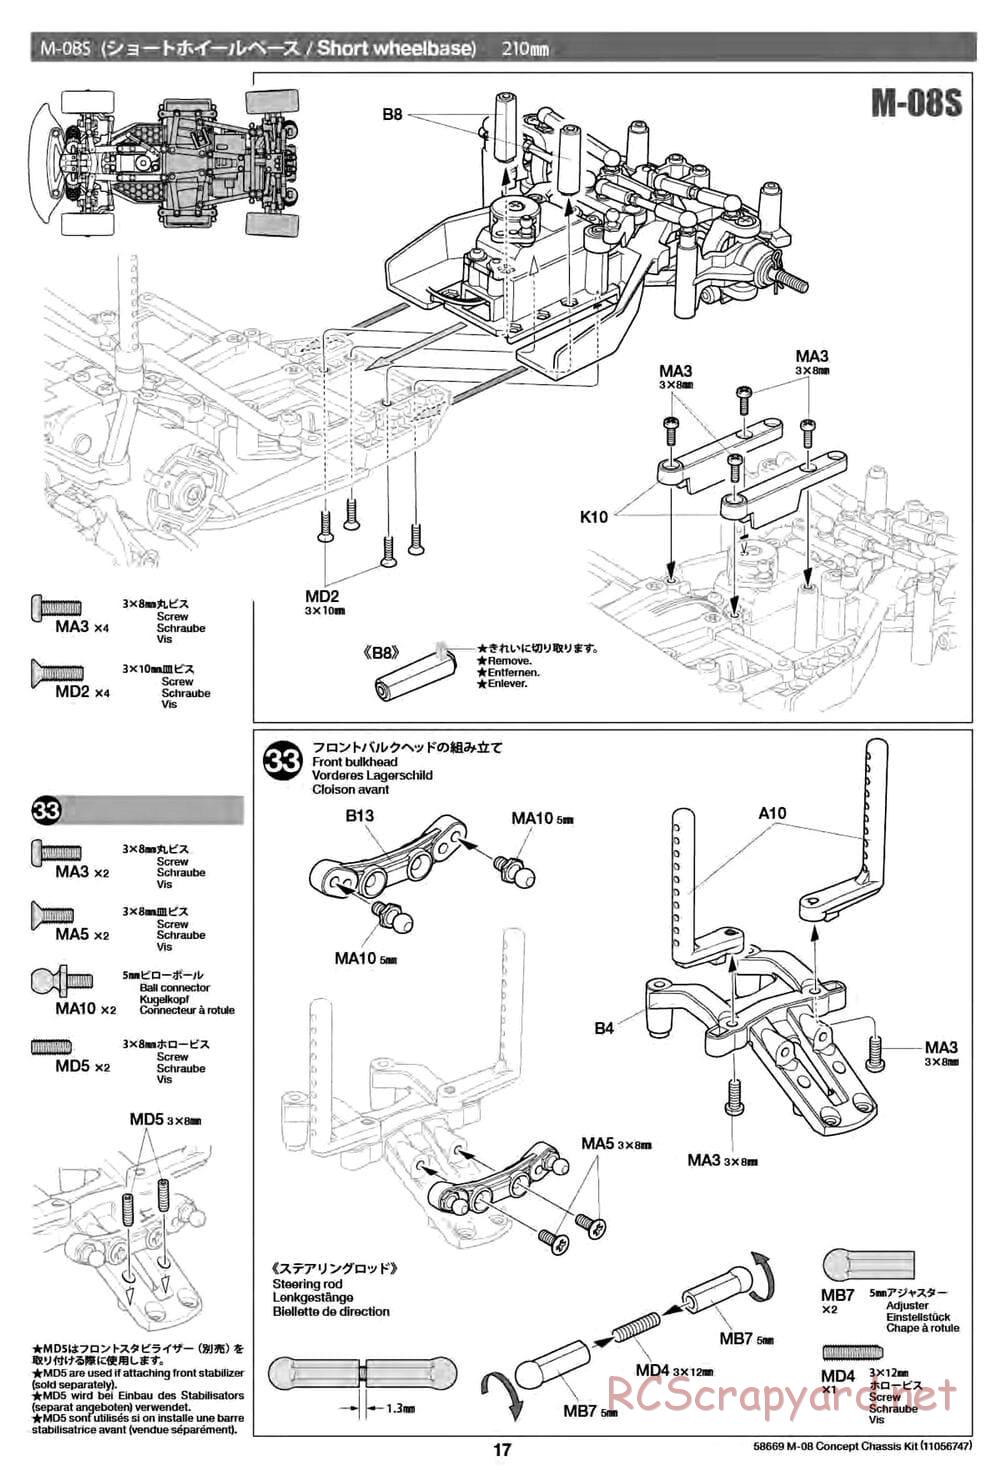 Tamiya - M-08 Concept Chassis - Manual - Page 17